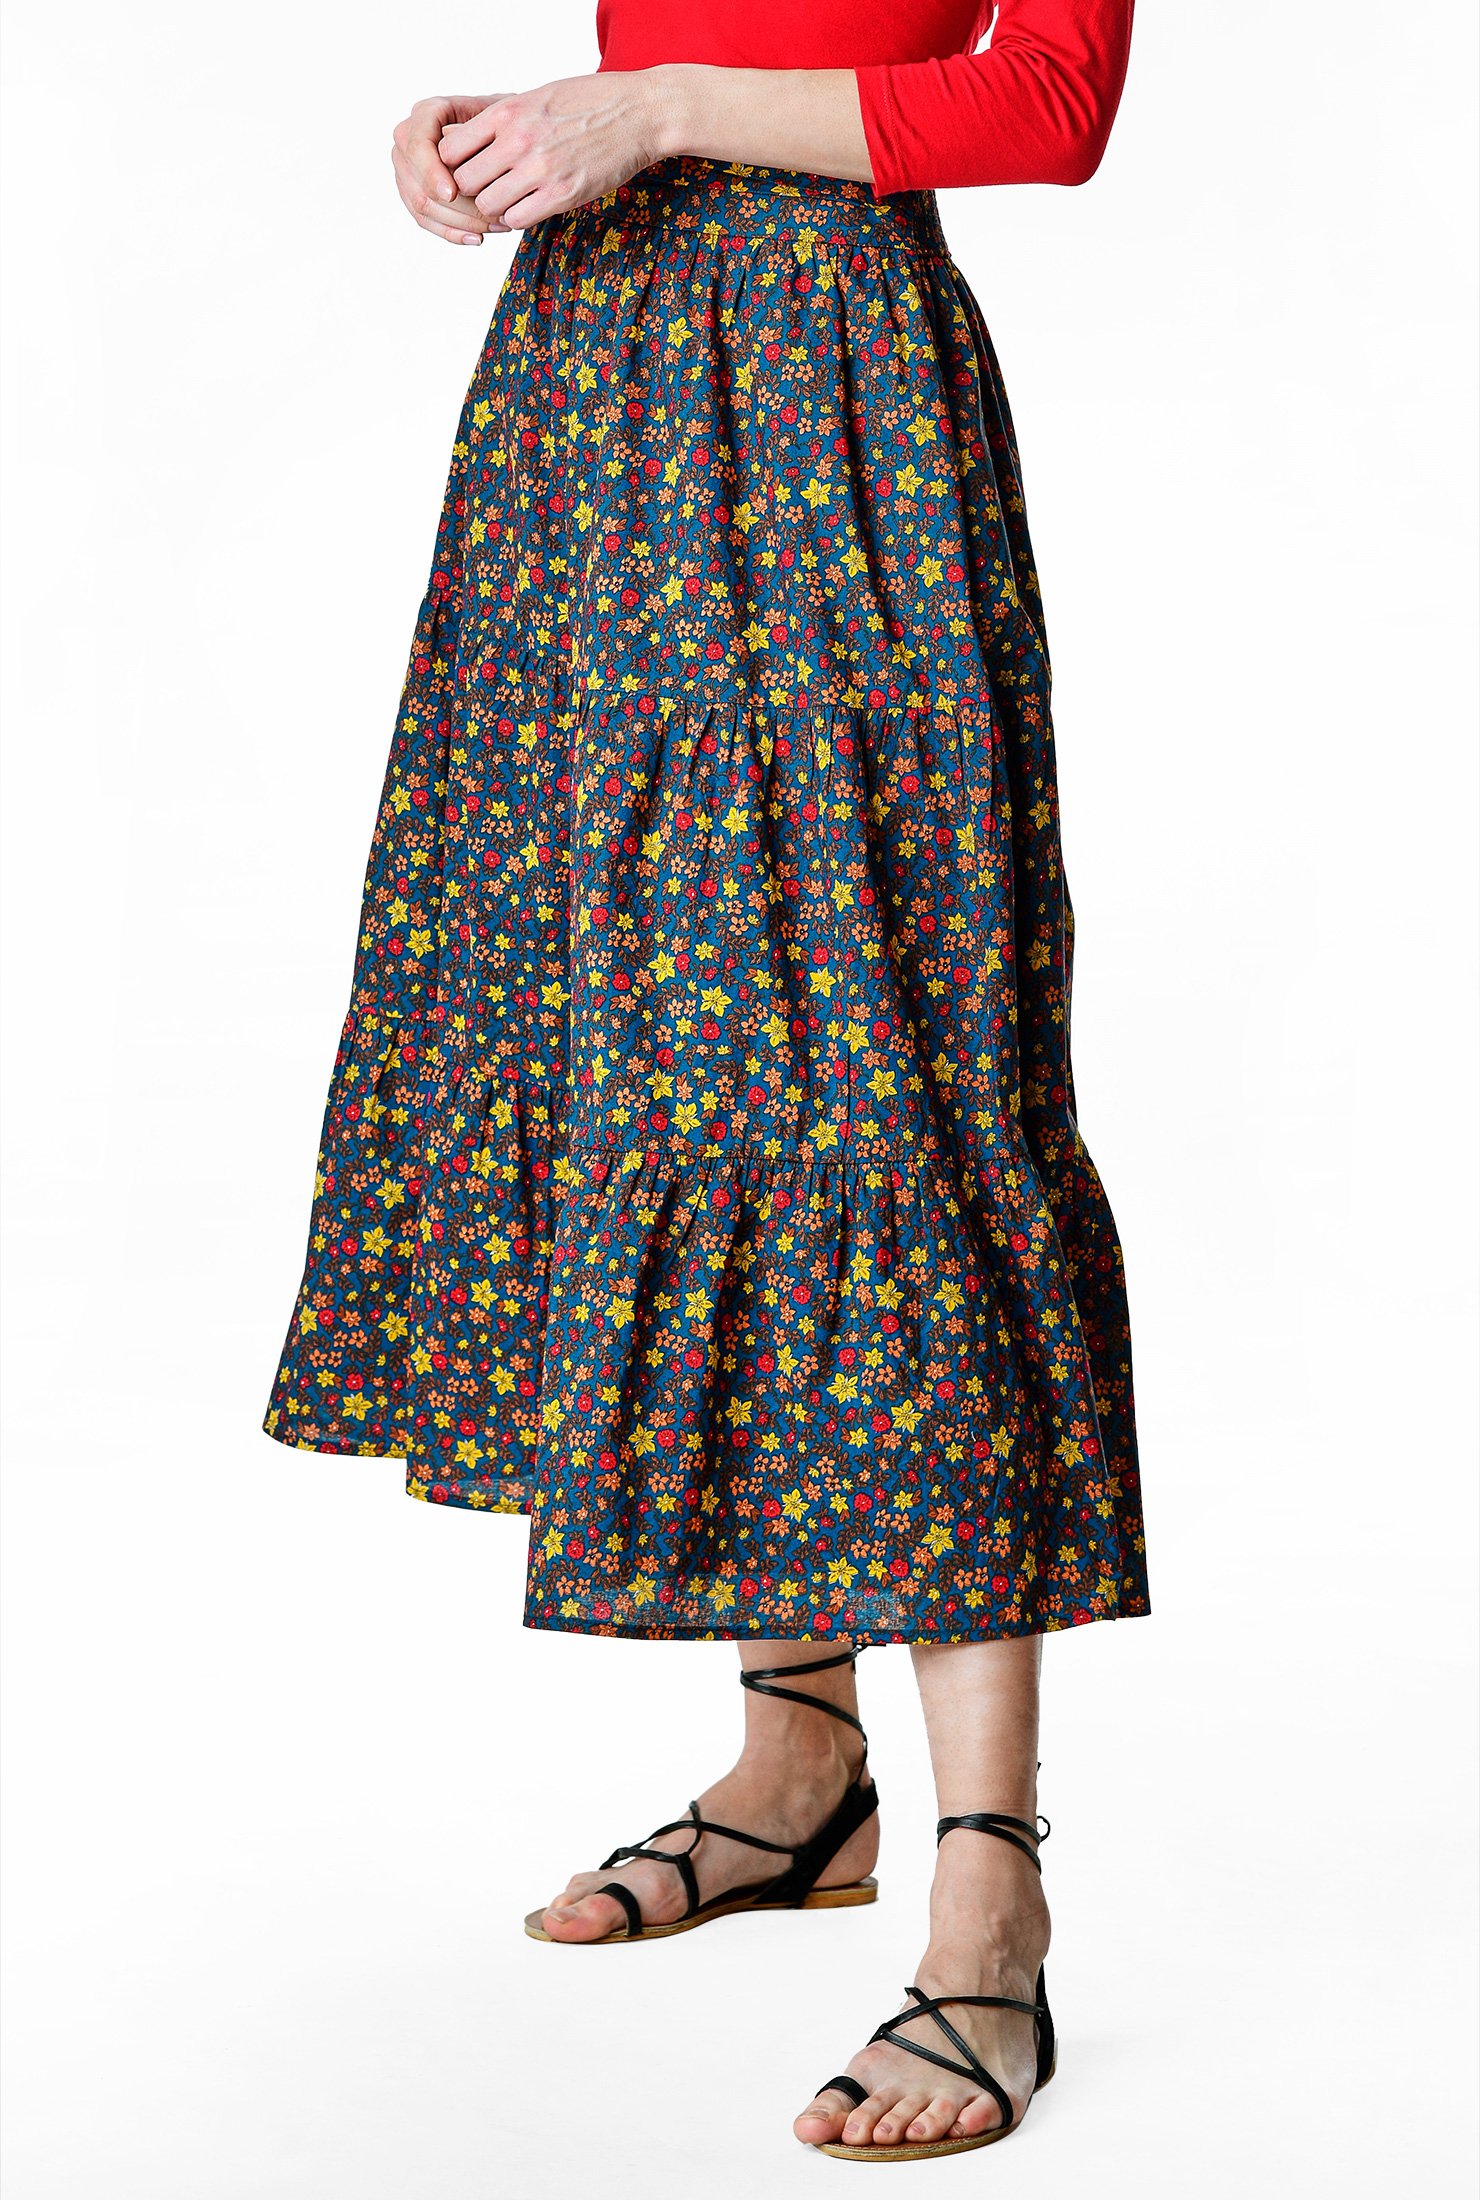 vintage tiered skirts